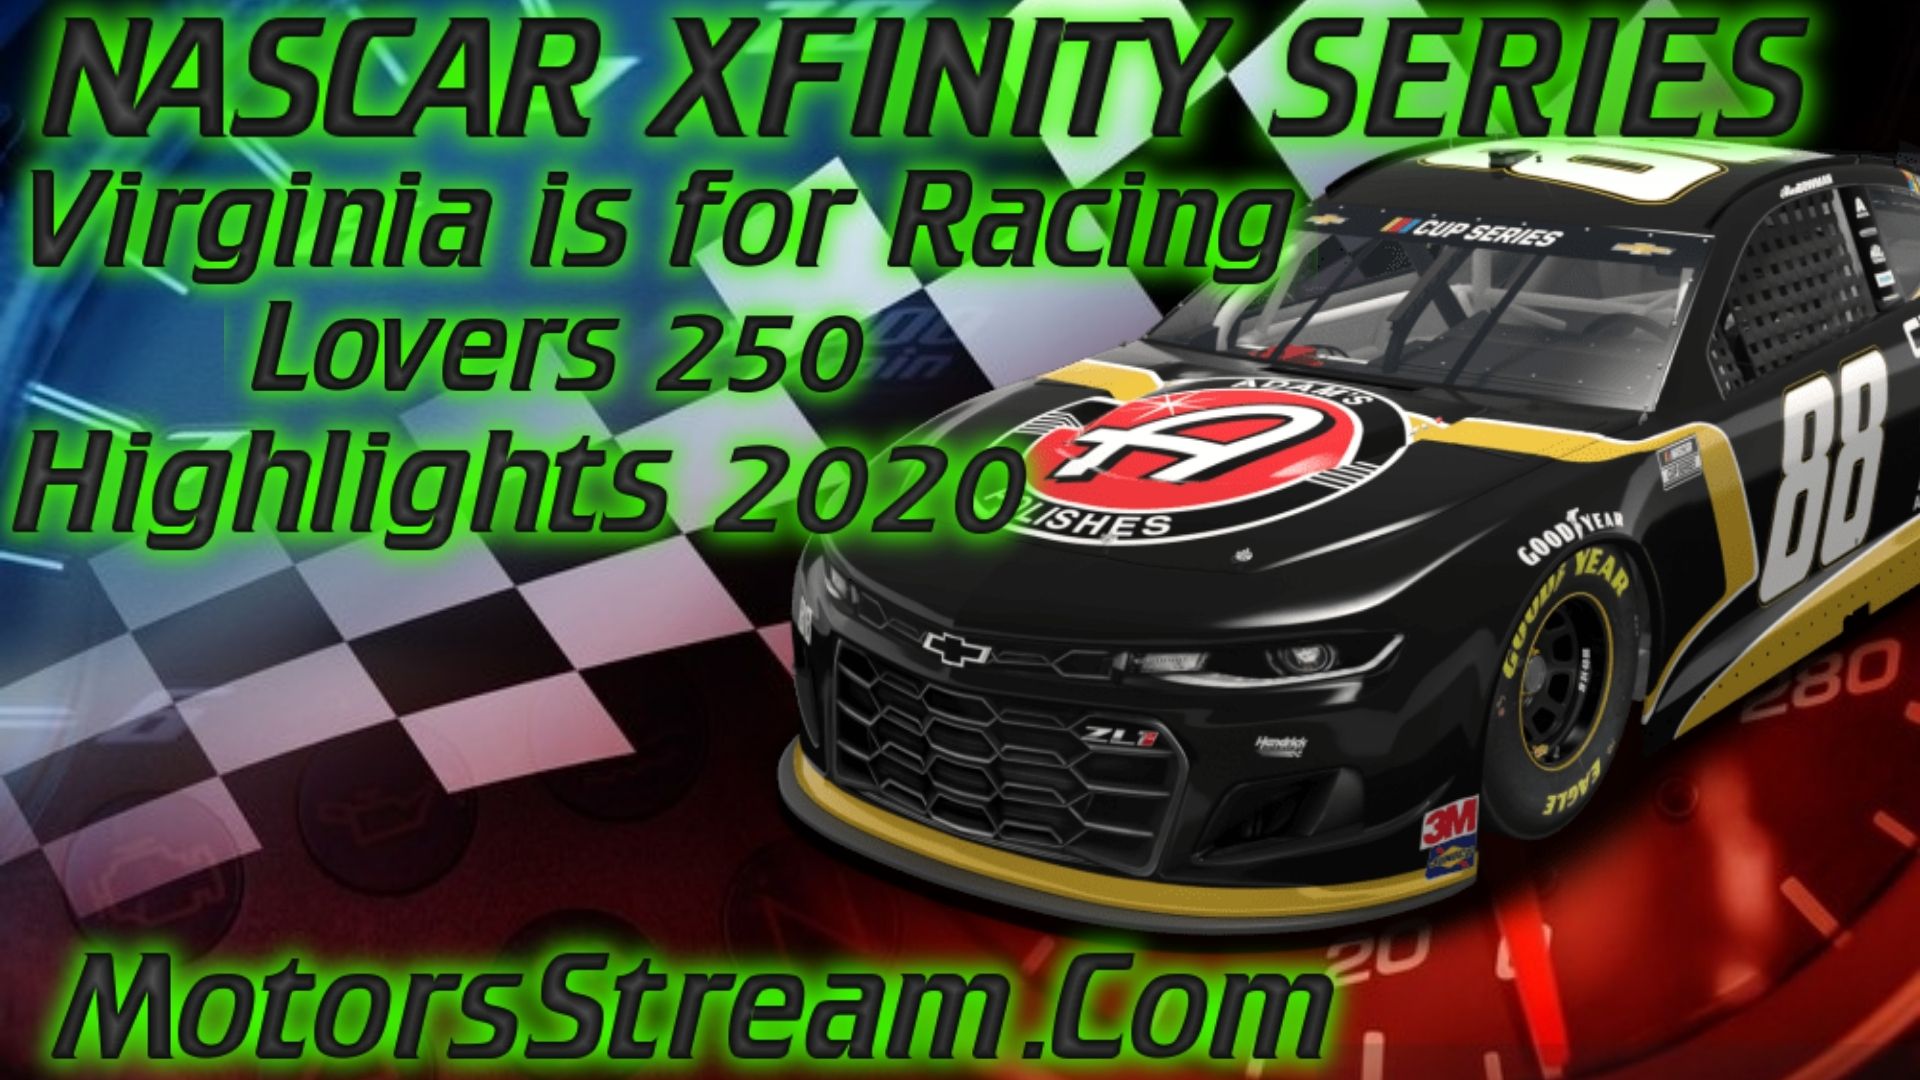 Virginia Racing Lovers 250 Highlights 2020 Nascar Xfinity Series